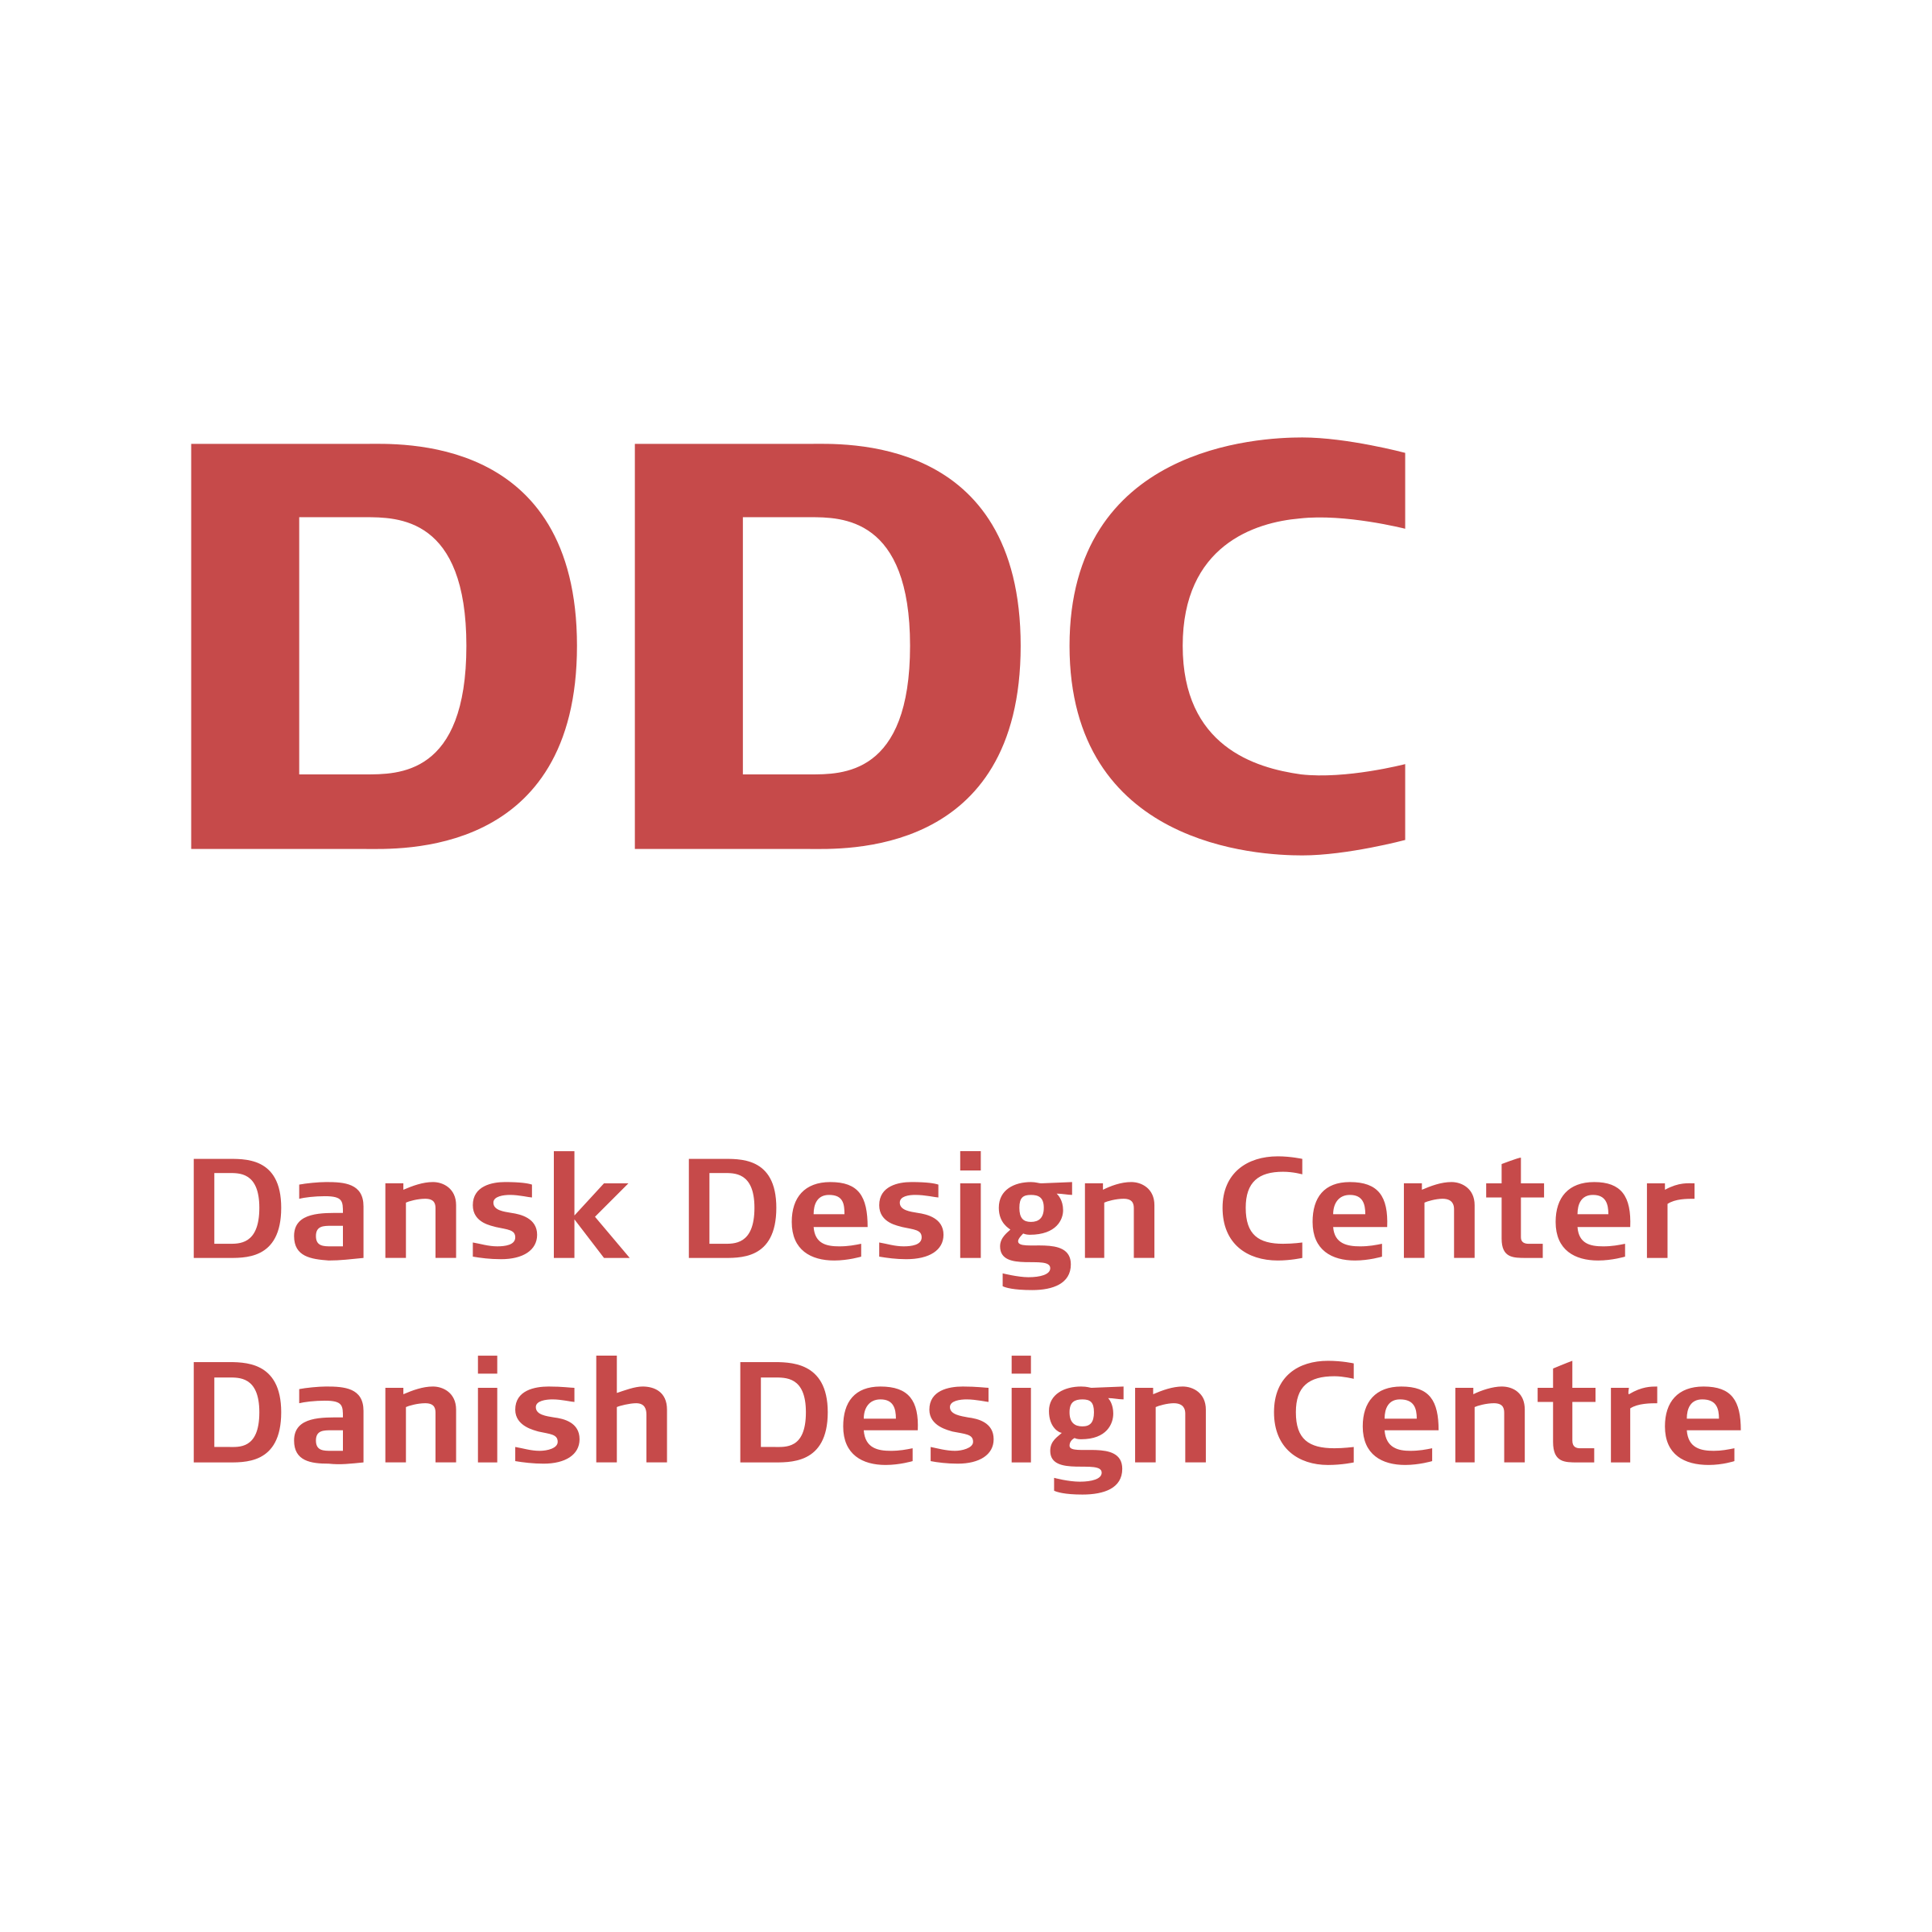 DDC Logo - DDC Logo PNG Transparent & SVG Vector - Freebie Supply